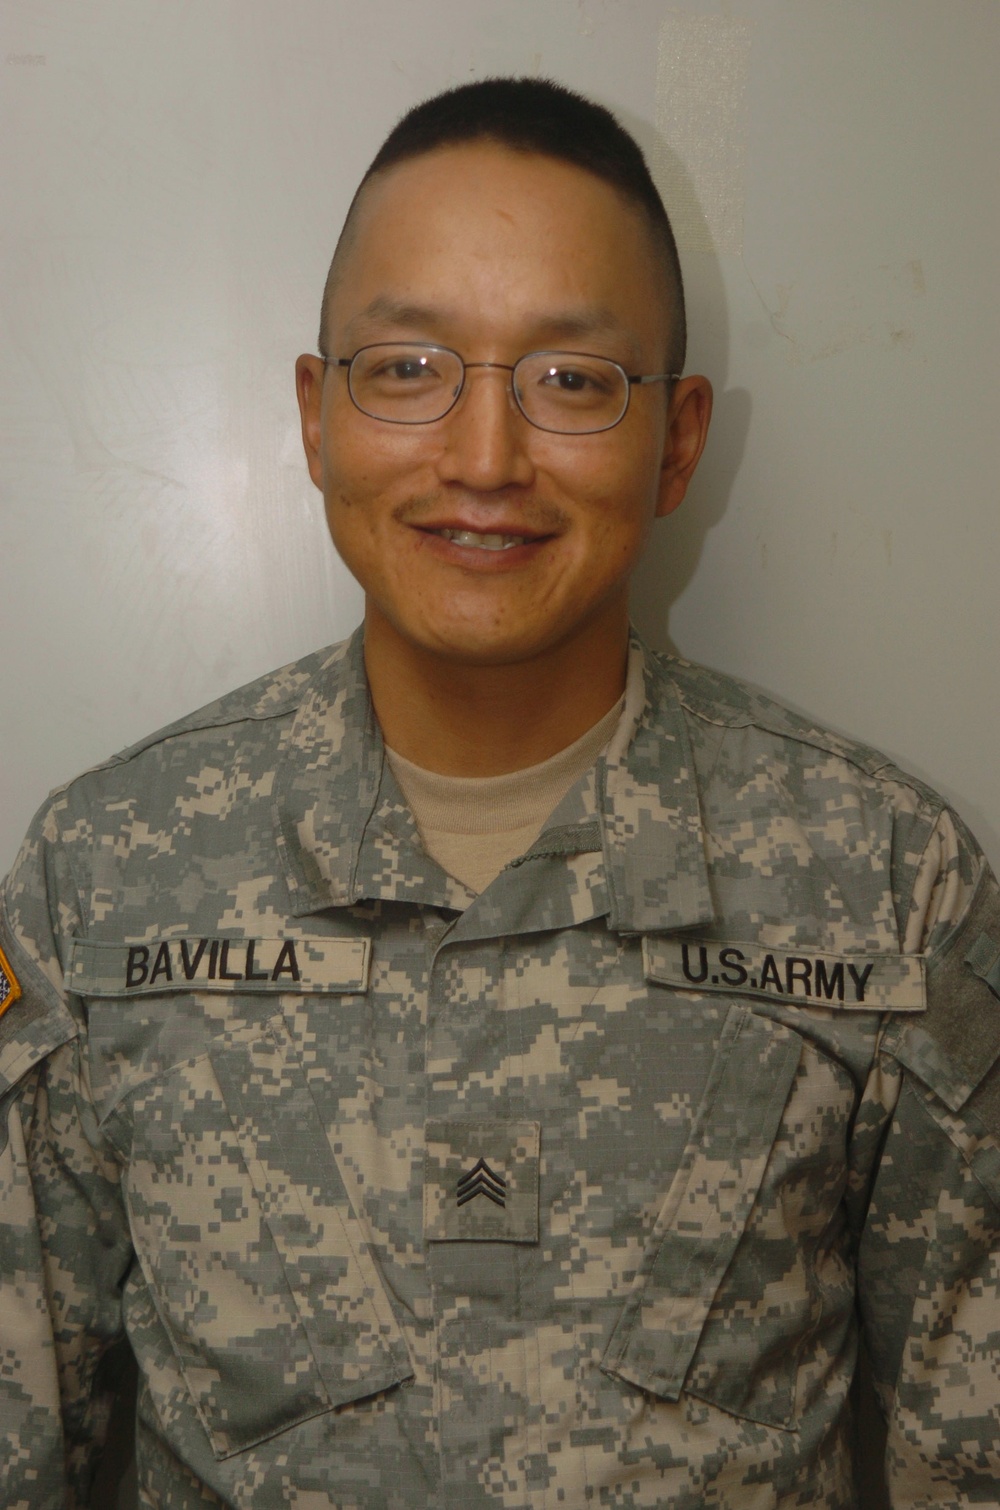 Sgt. Paul Bavilla